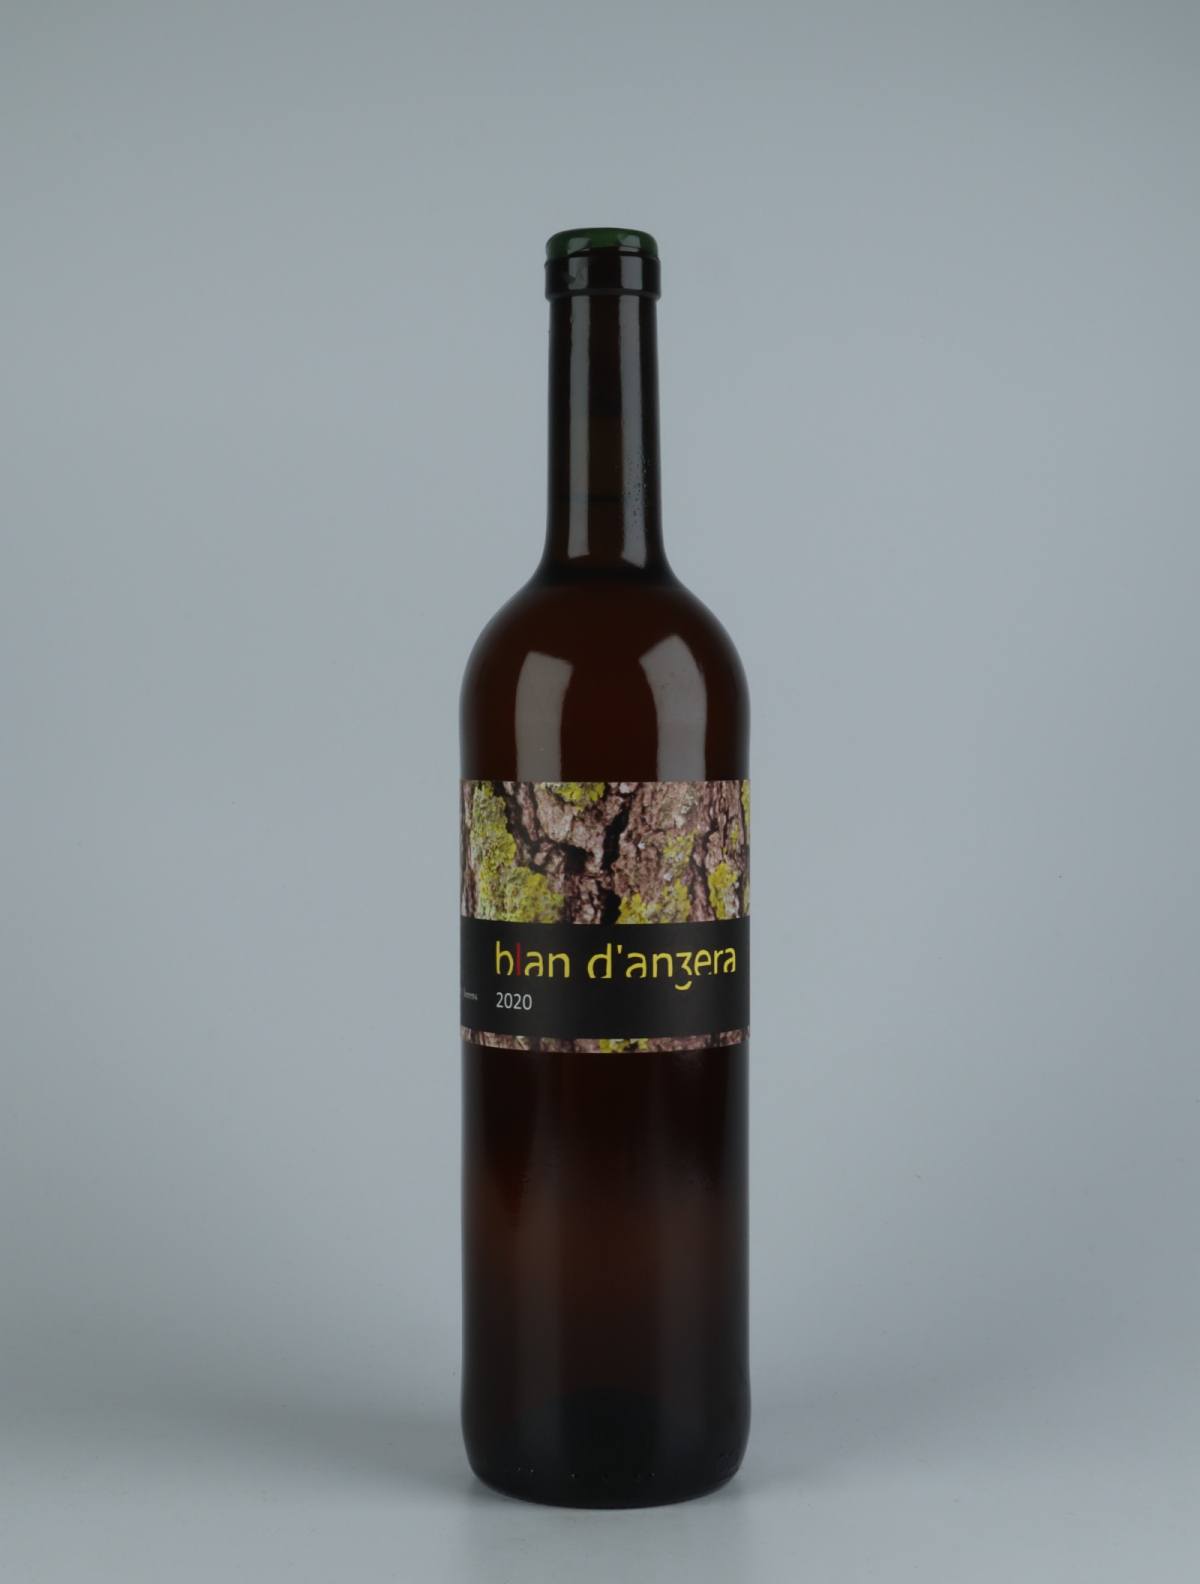 En flaske 2020 Blan d'Anzera Orange vin fra Jordi Llorens, Catalonien i Spanien